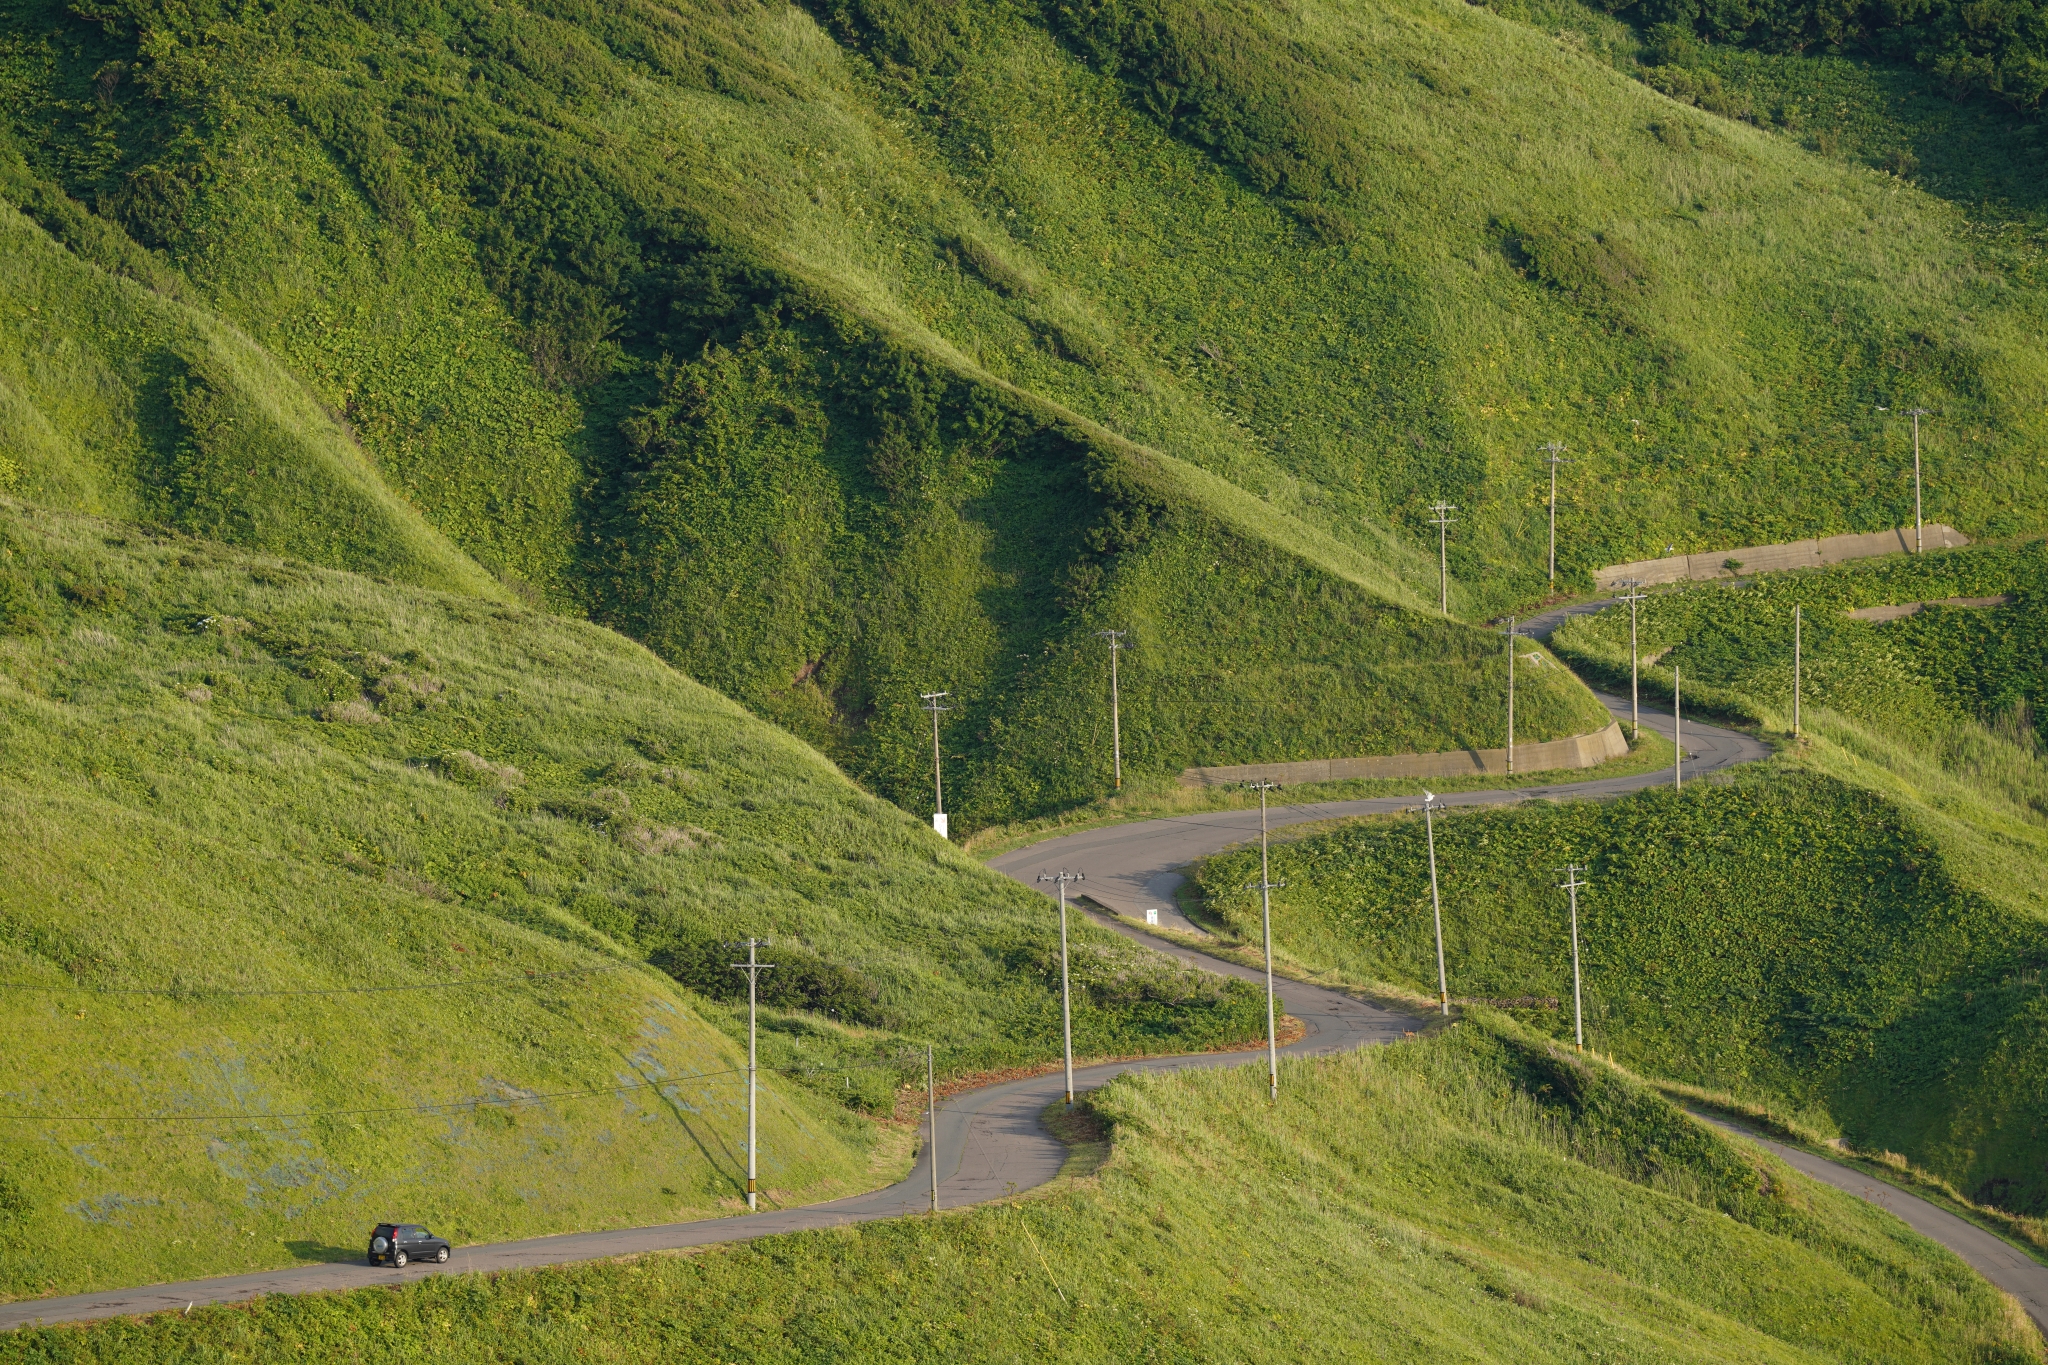 Road winding along a grass-covered hillside